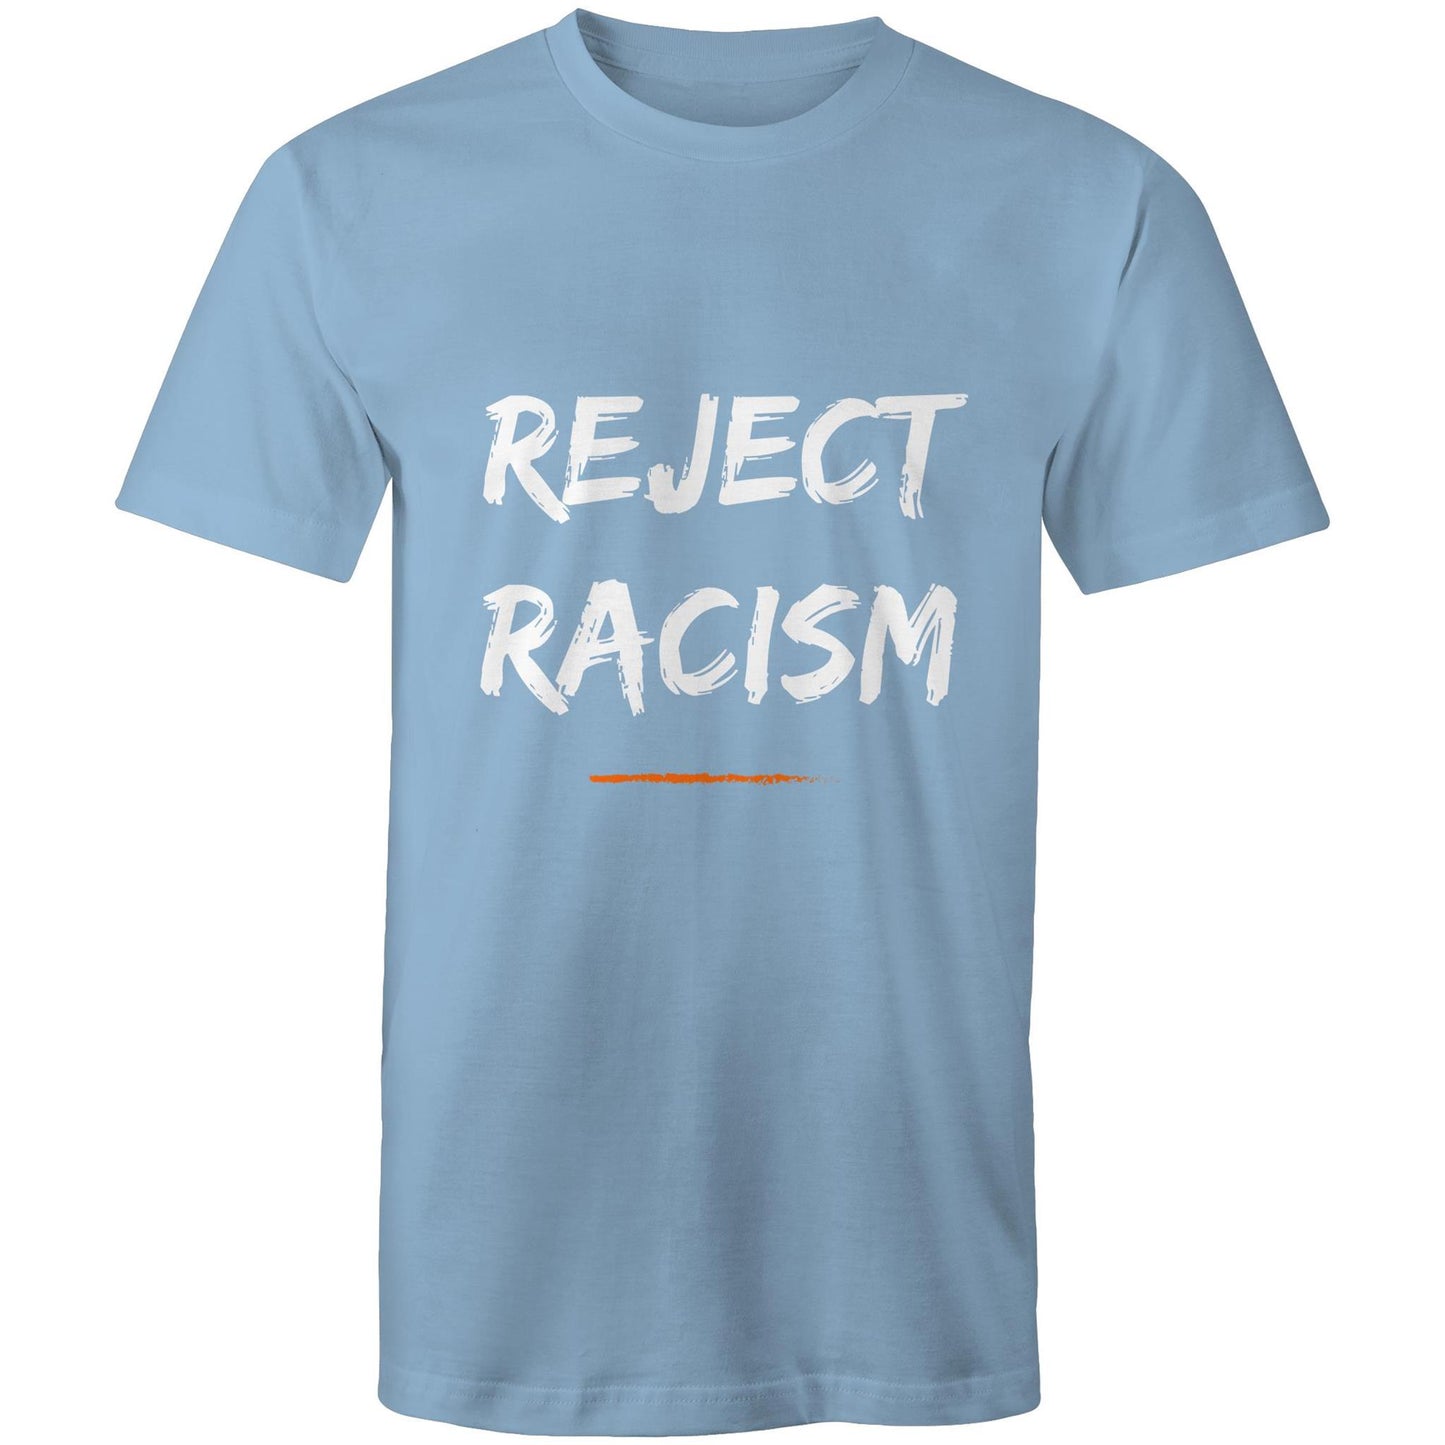 REJECT RACISM - Mens T-Shirt